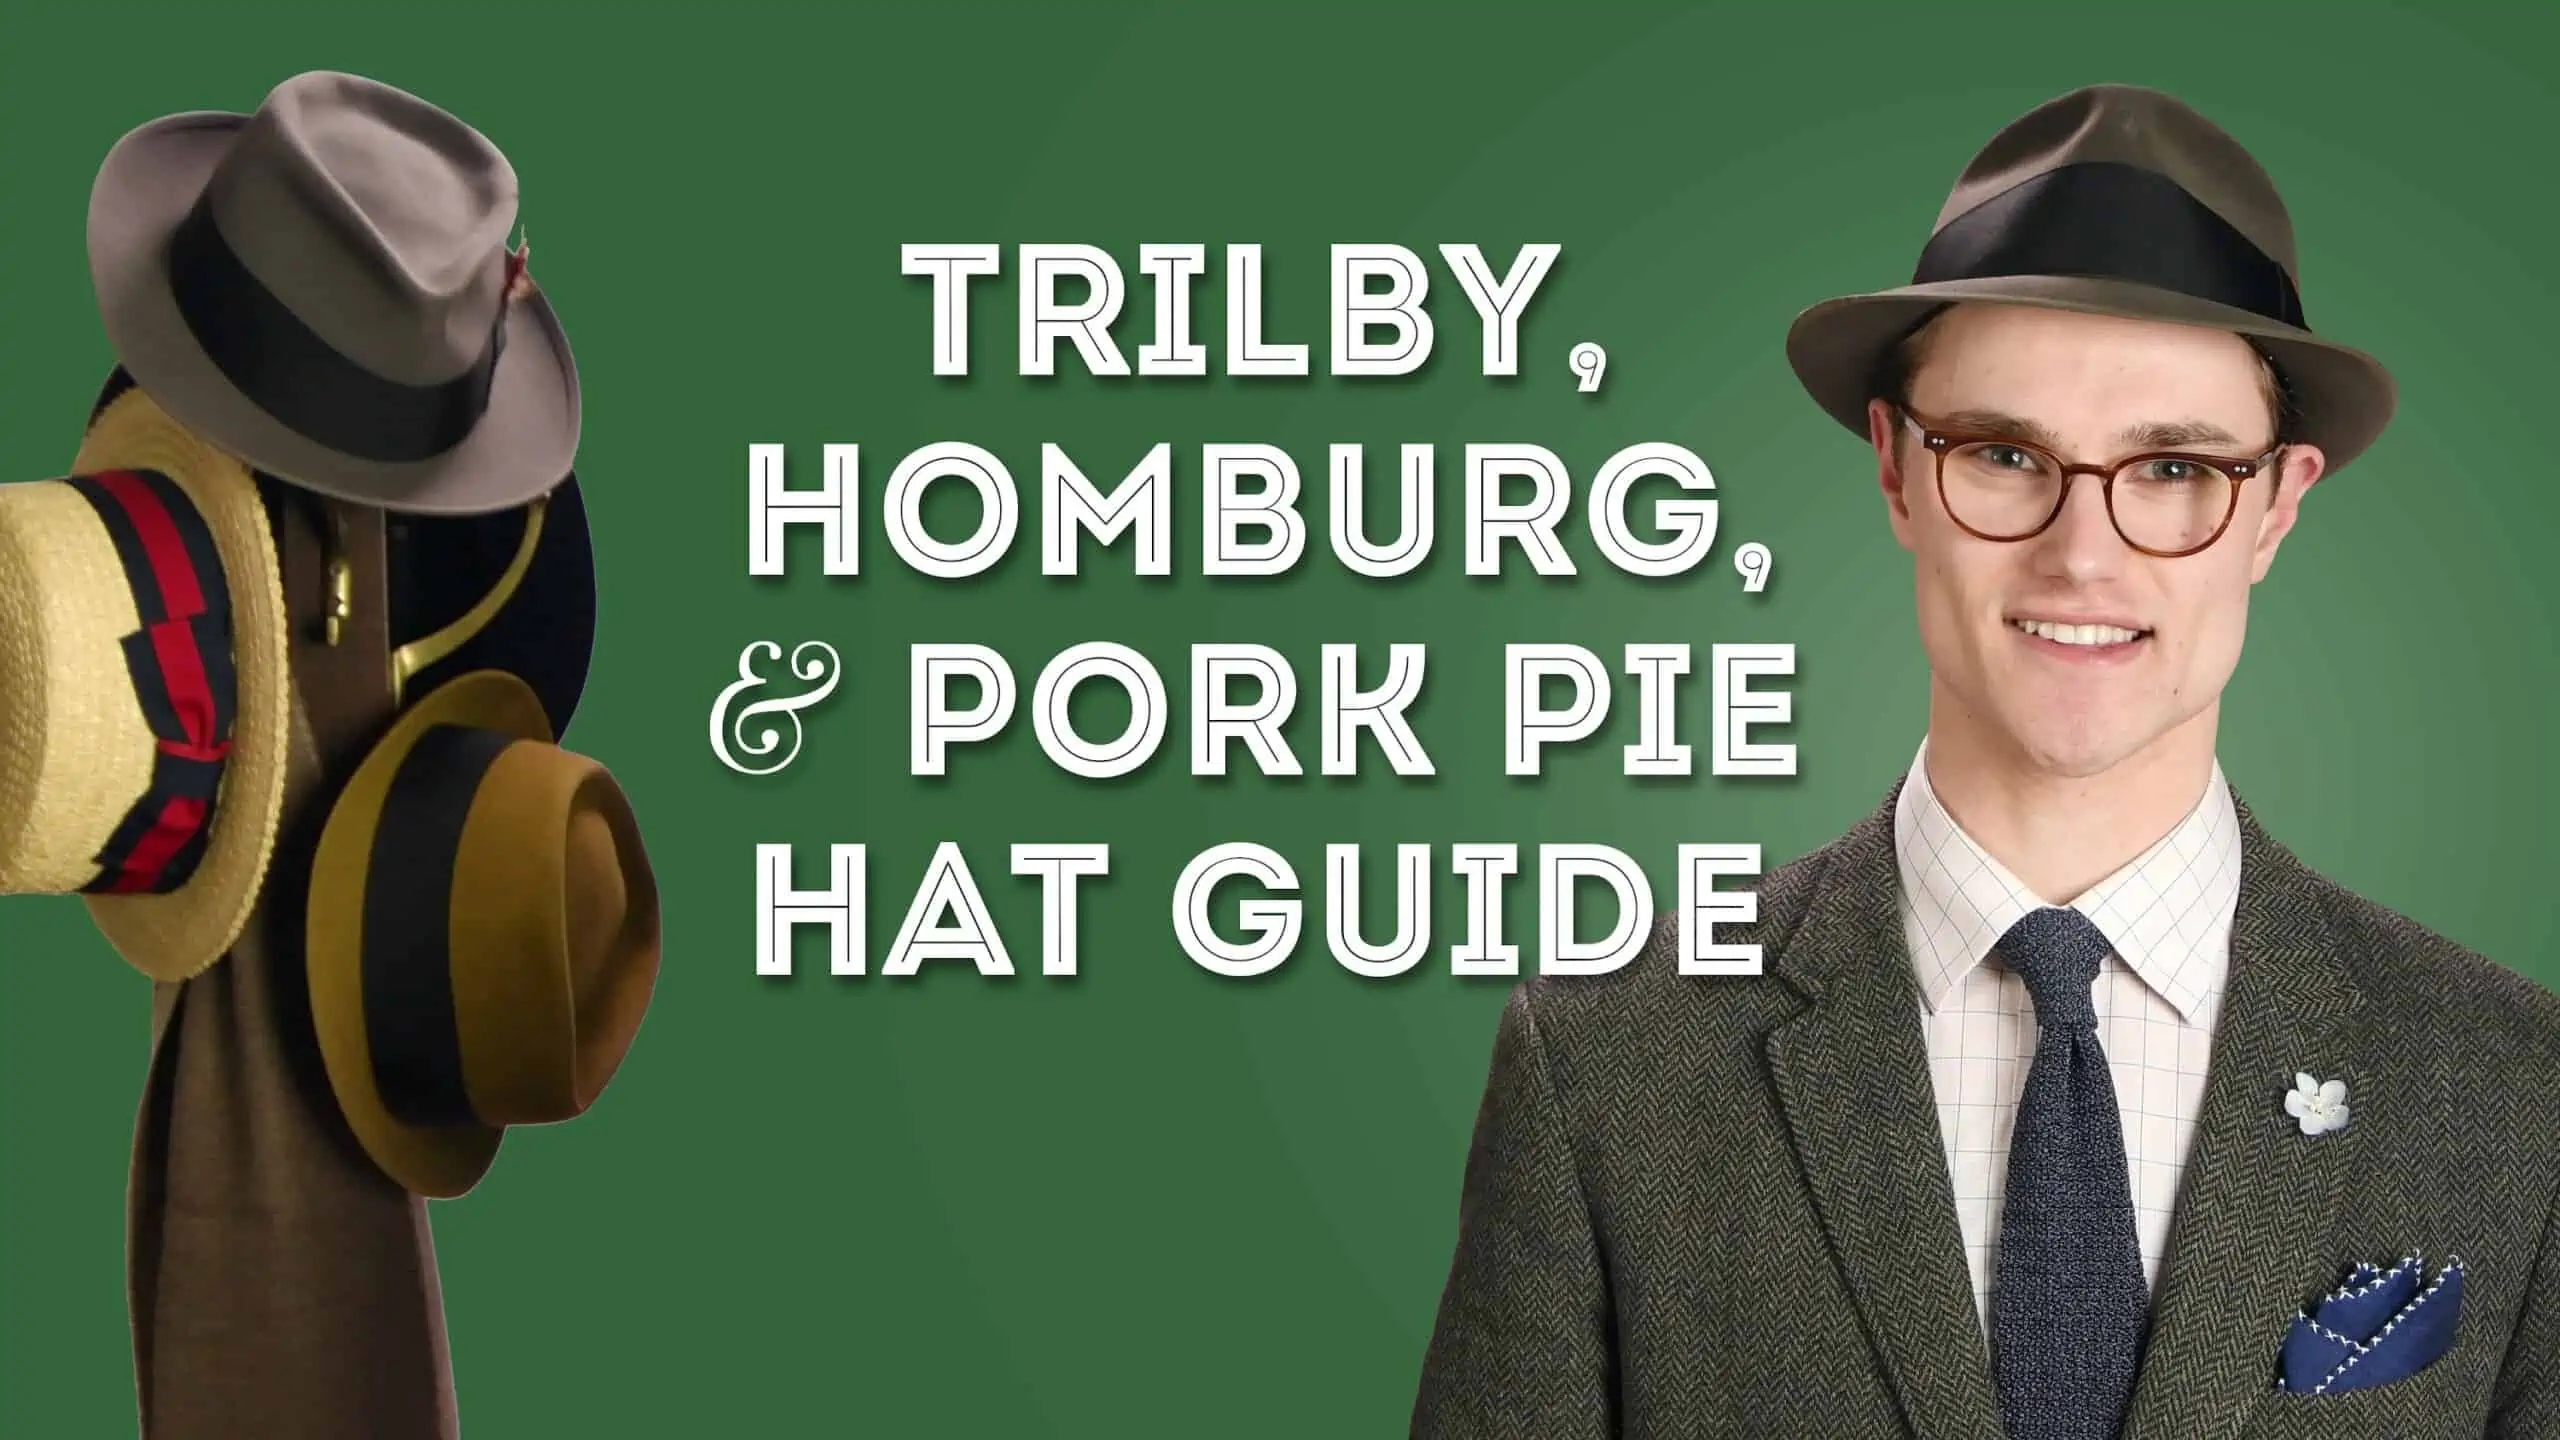 trilby homburg pork pie hat guide 3840x2160 scaled